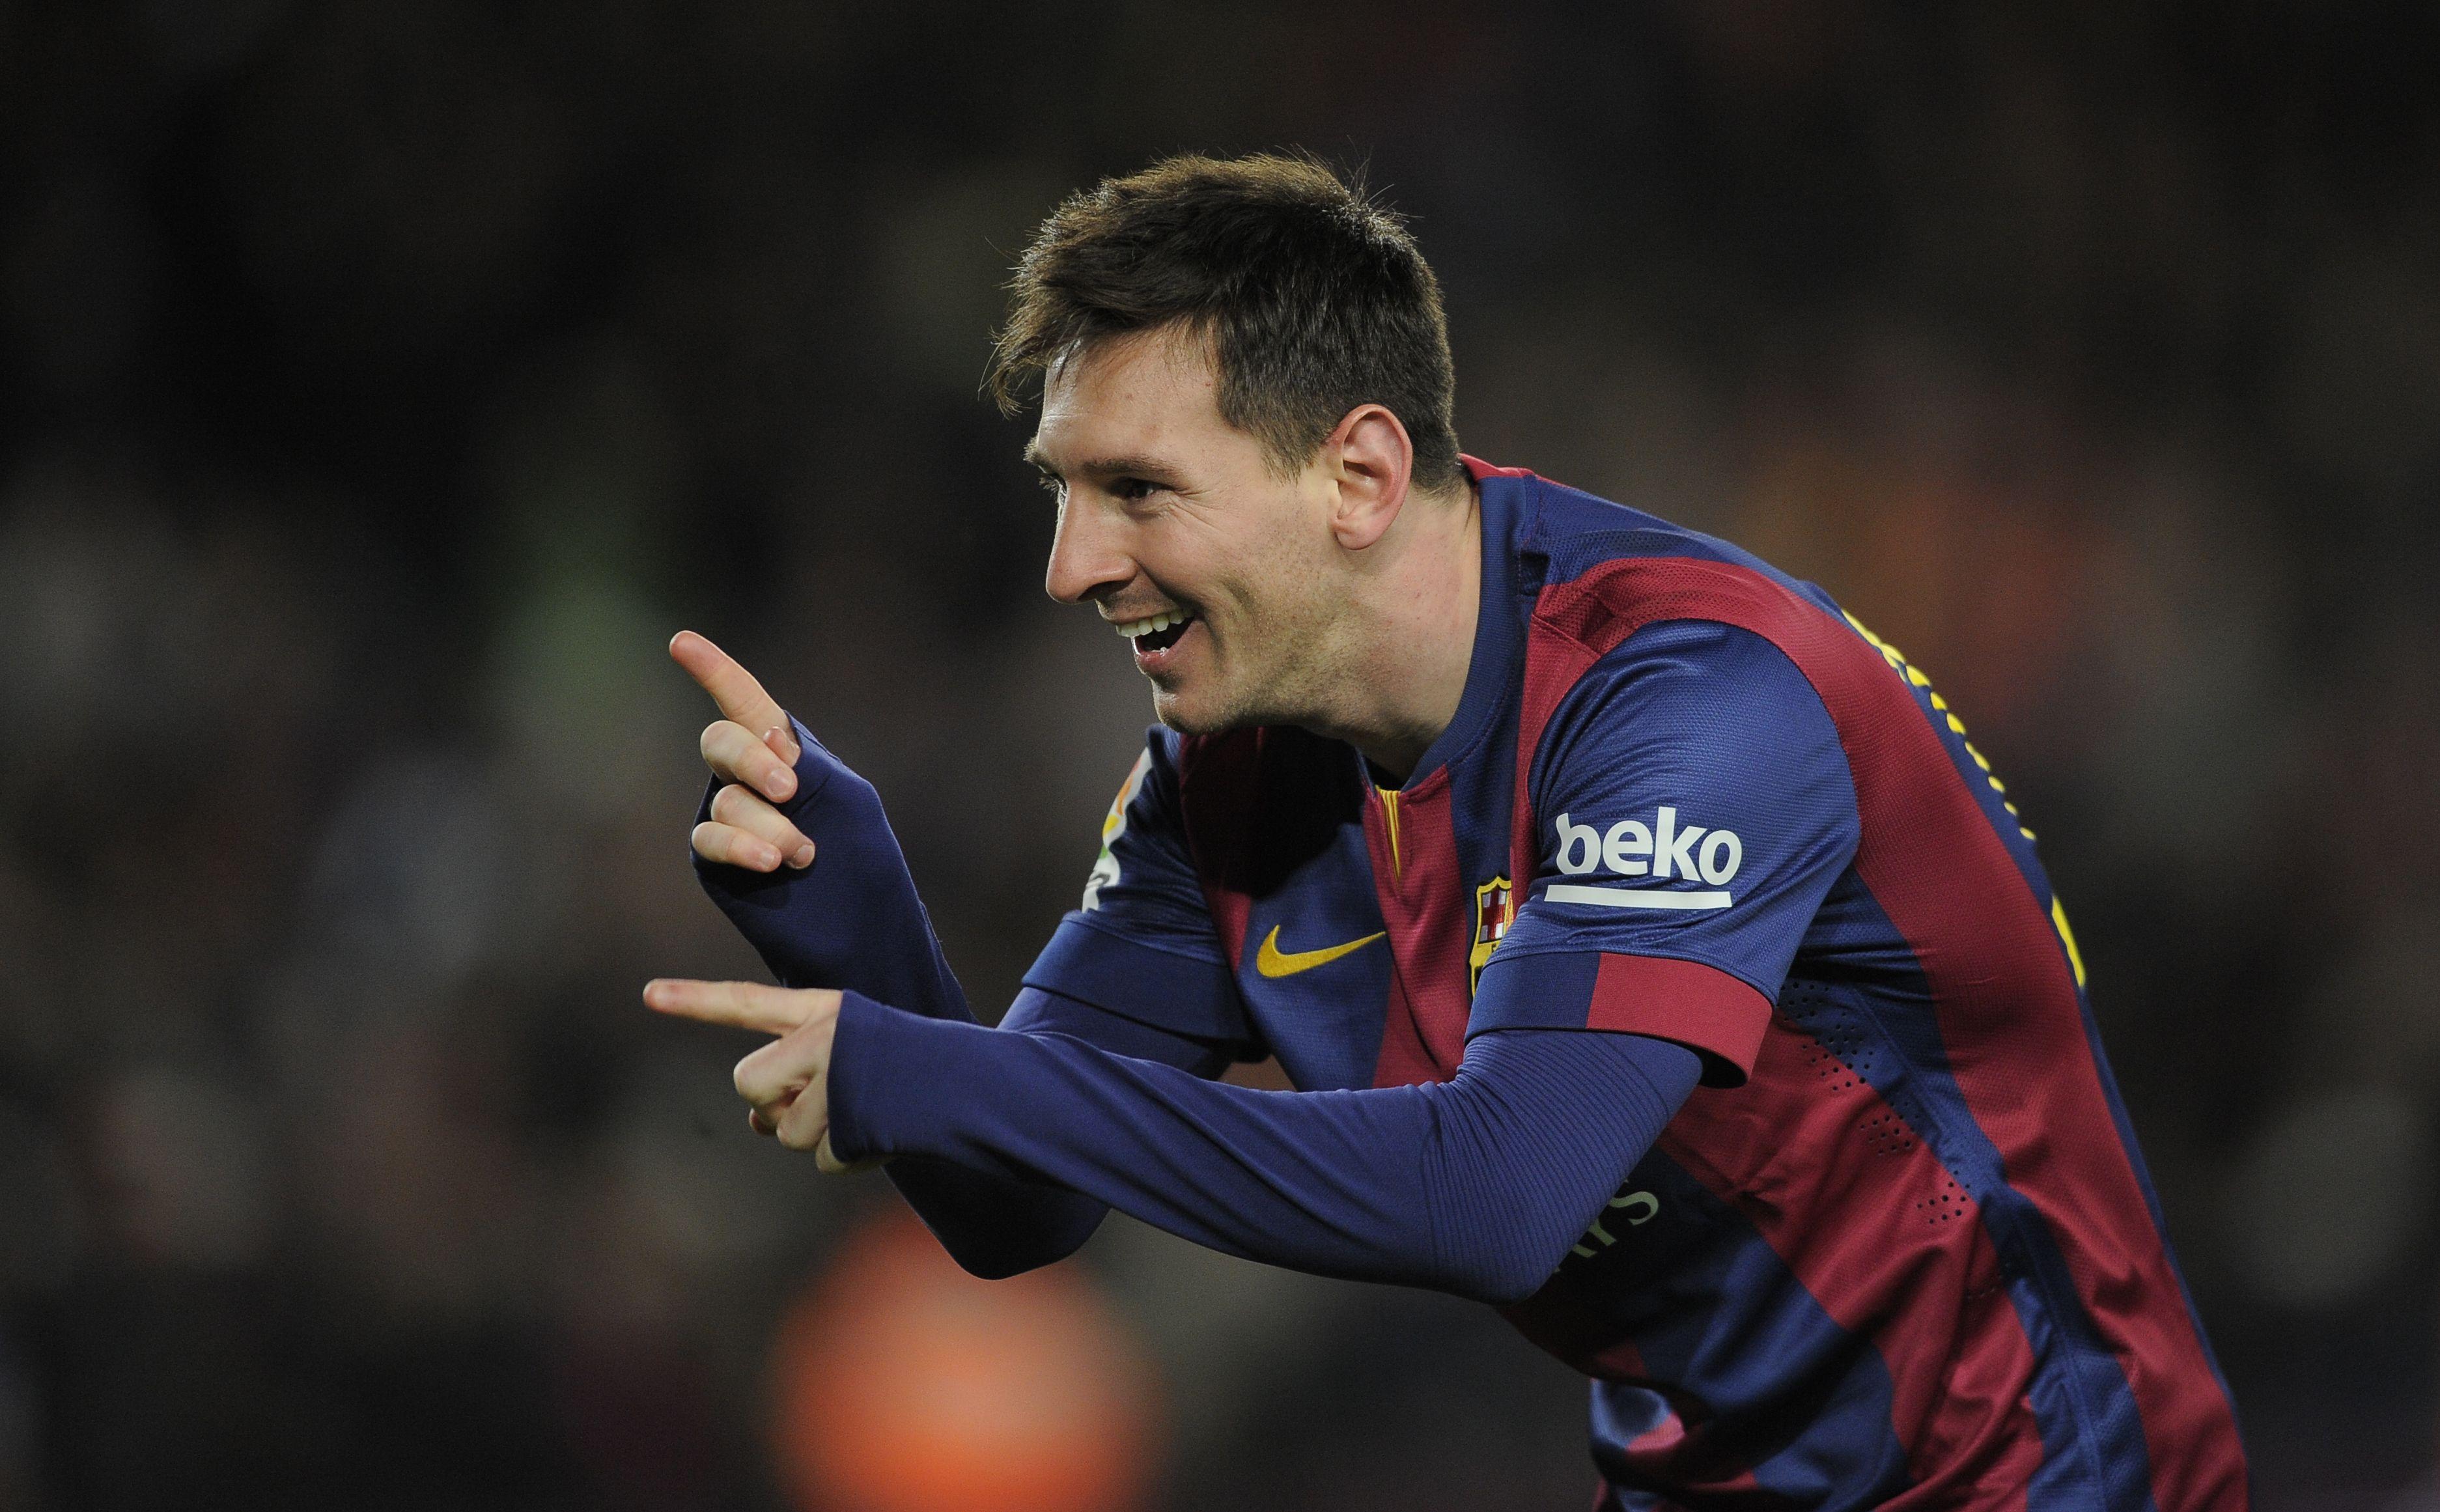 Lionel Messi Wallpaper, Picture, Image